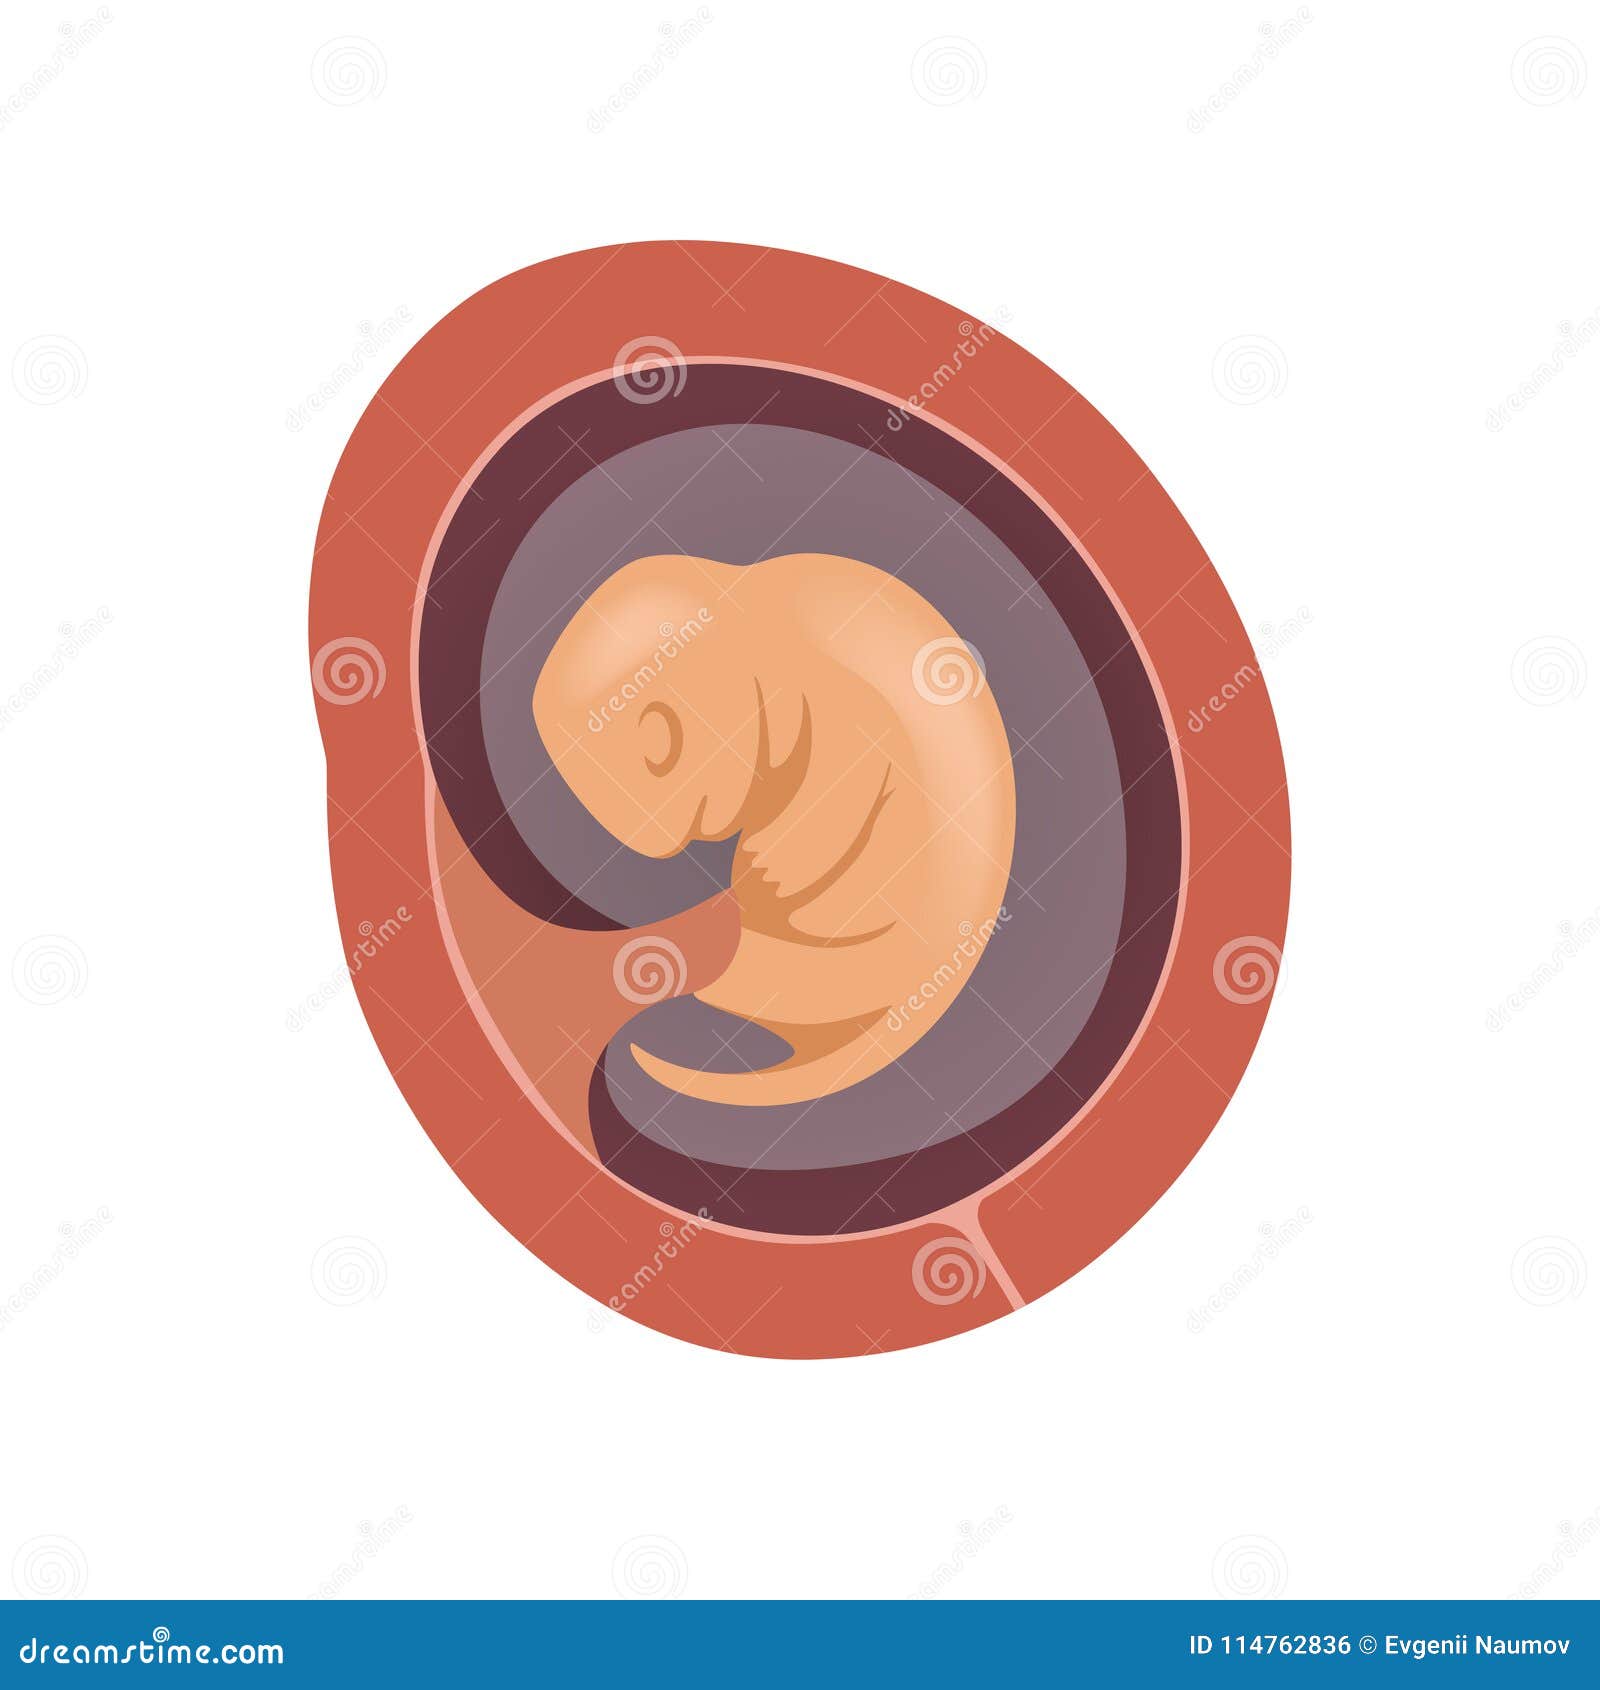 Stages of Fetal Development - CoParents.co.uk Blog